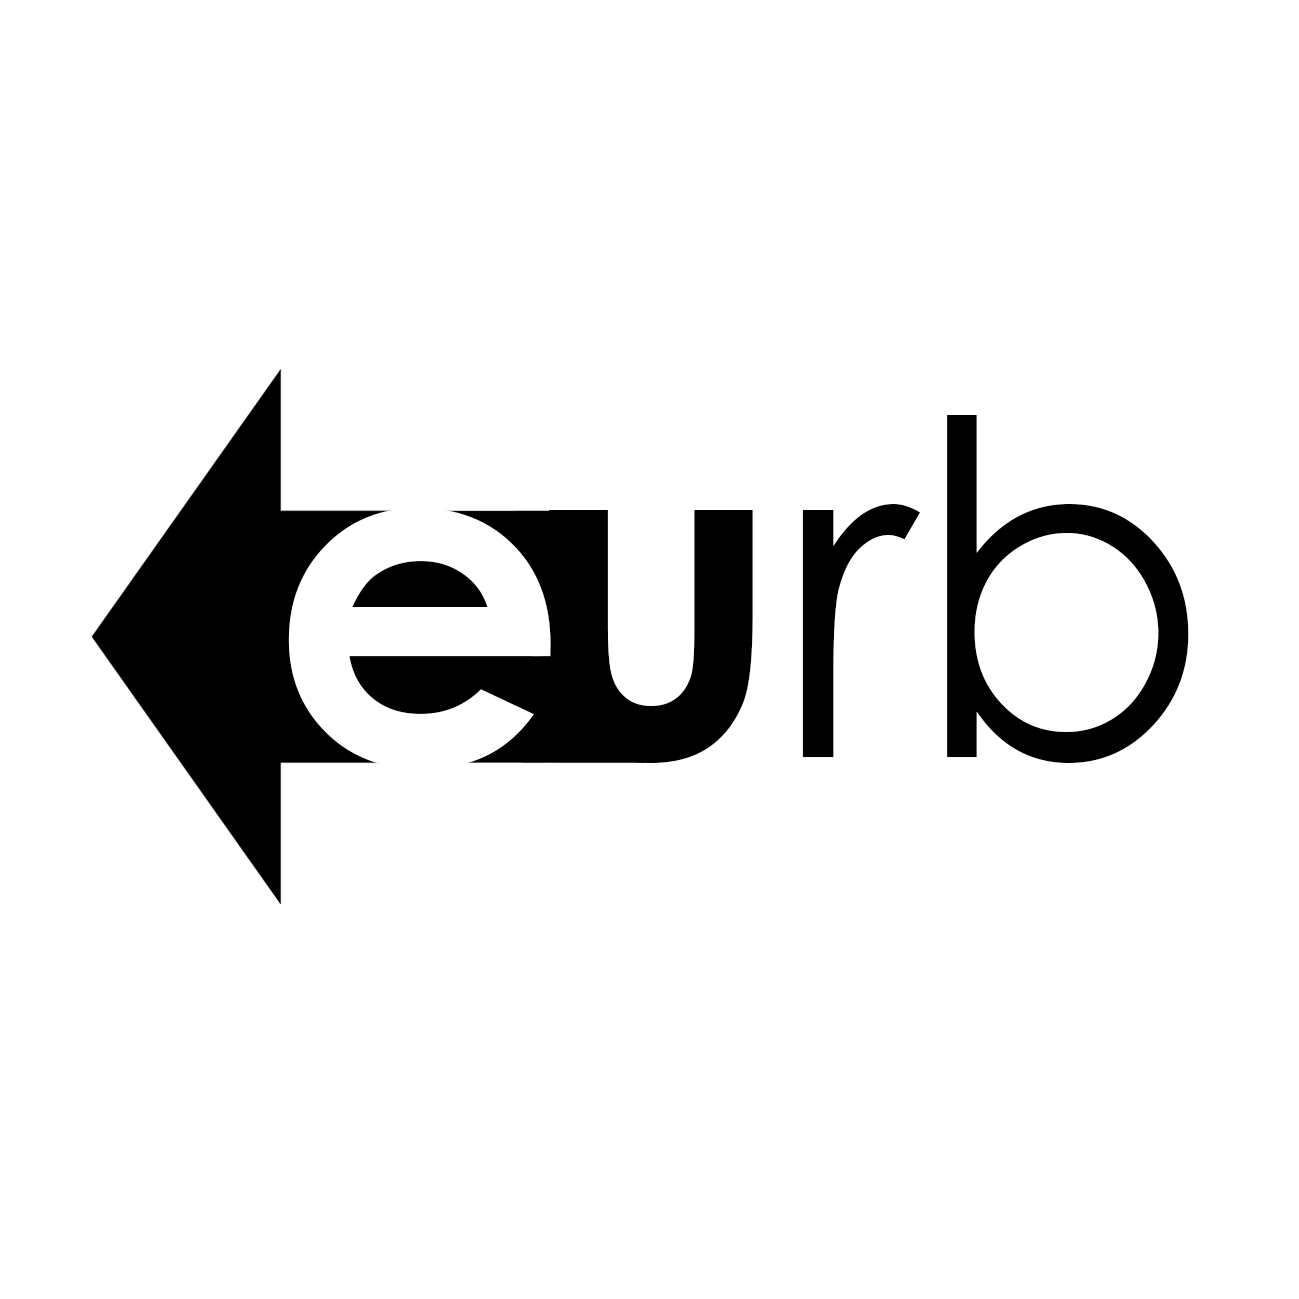 eurb